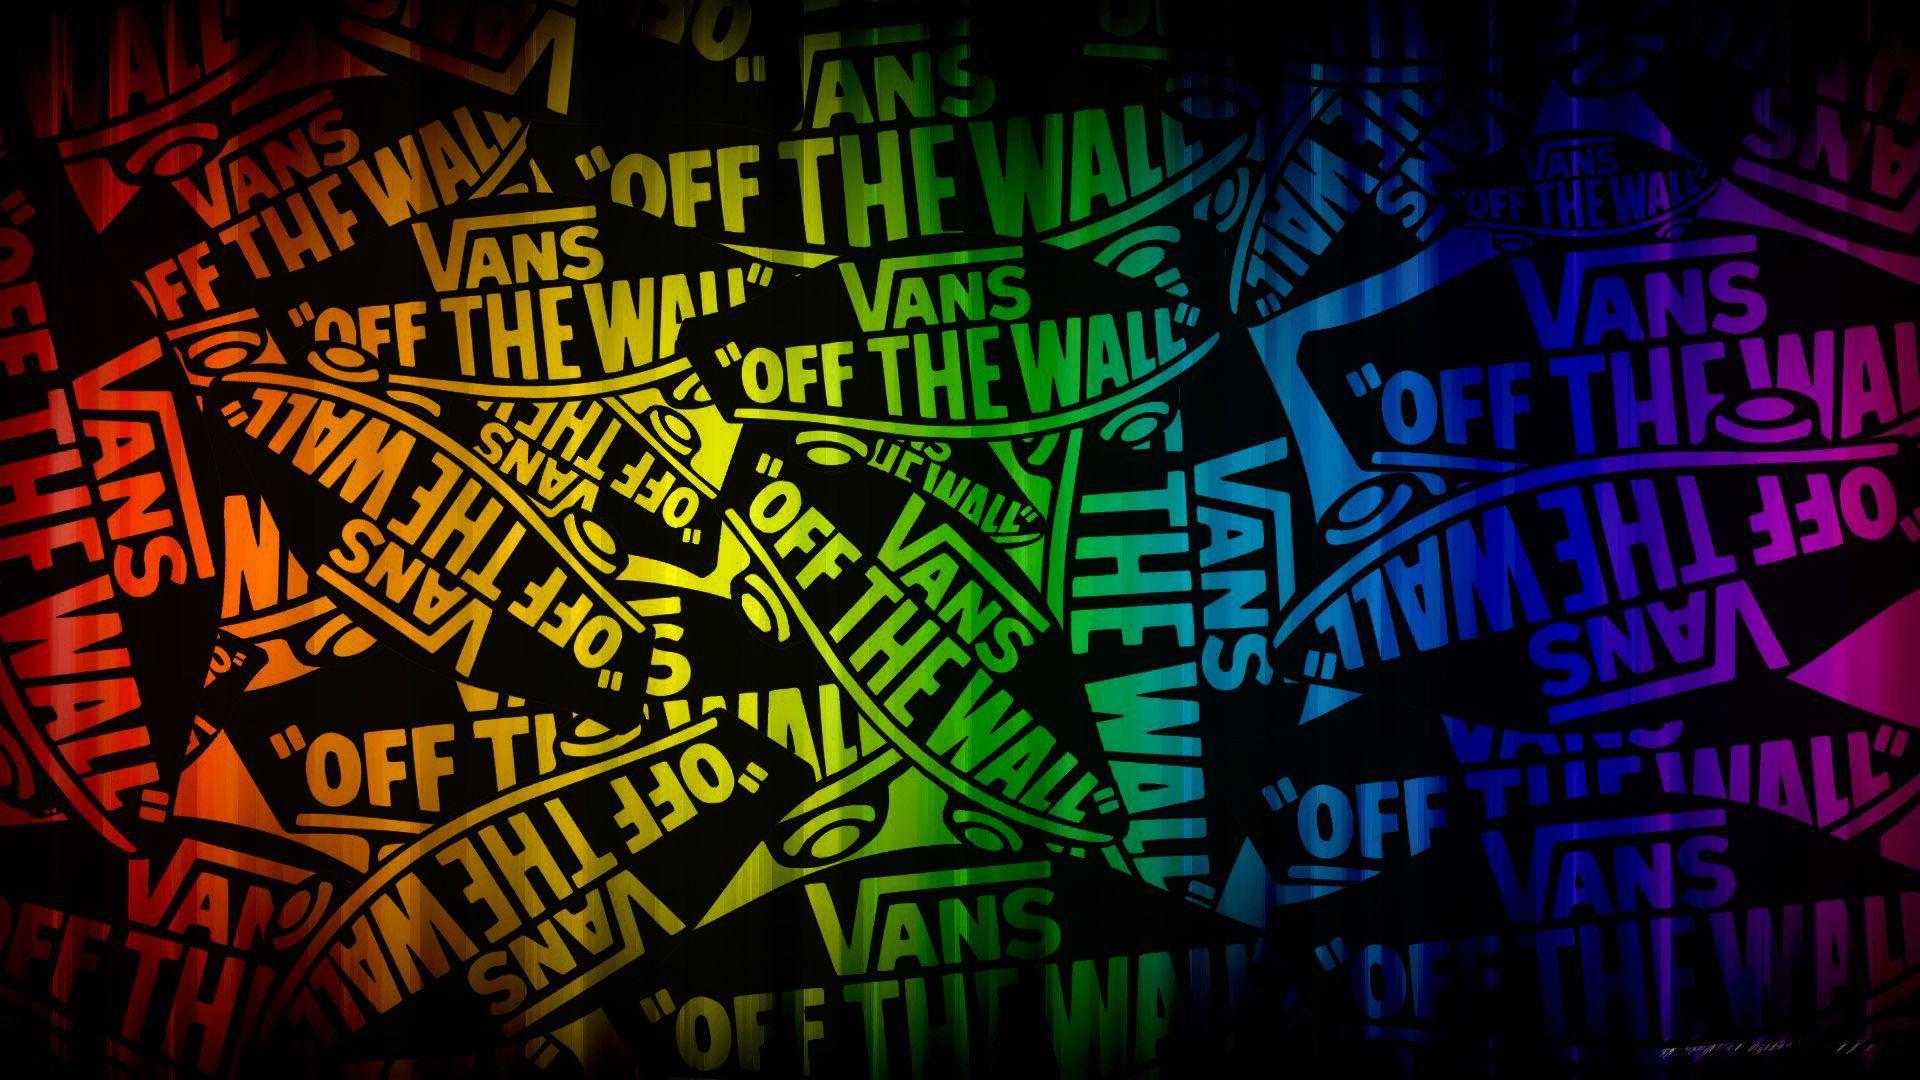 Cool Vans Wallpaper Wallpaperafari Off The Wall By Ceejaydejesus